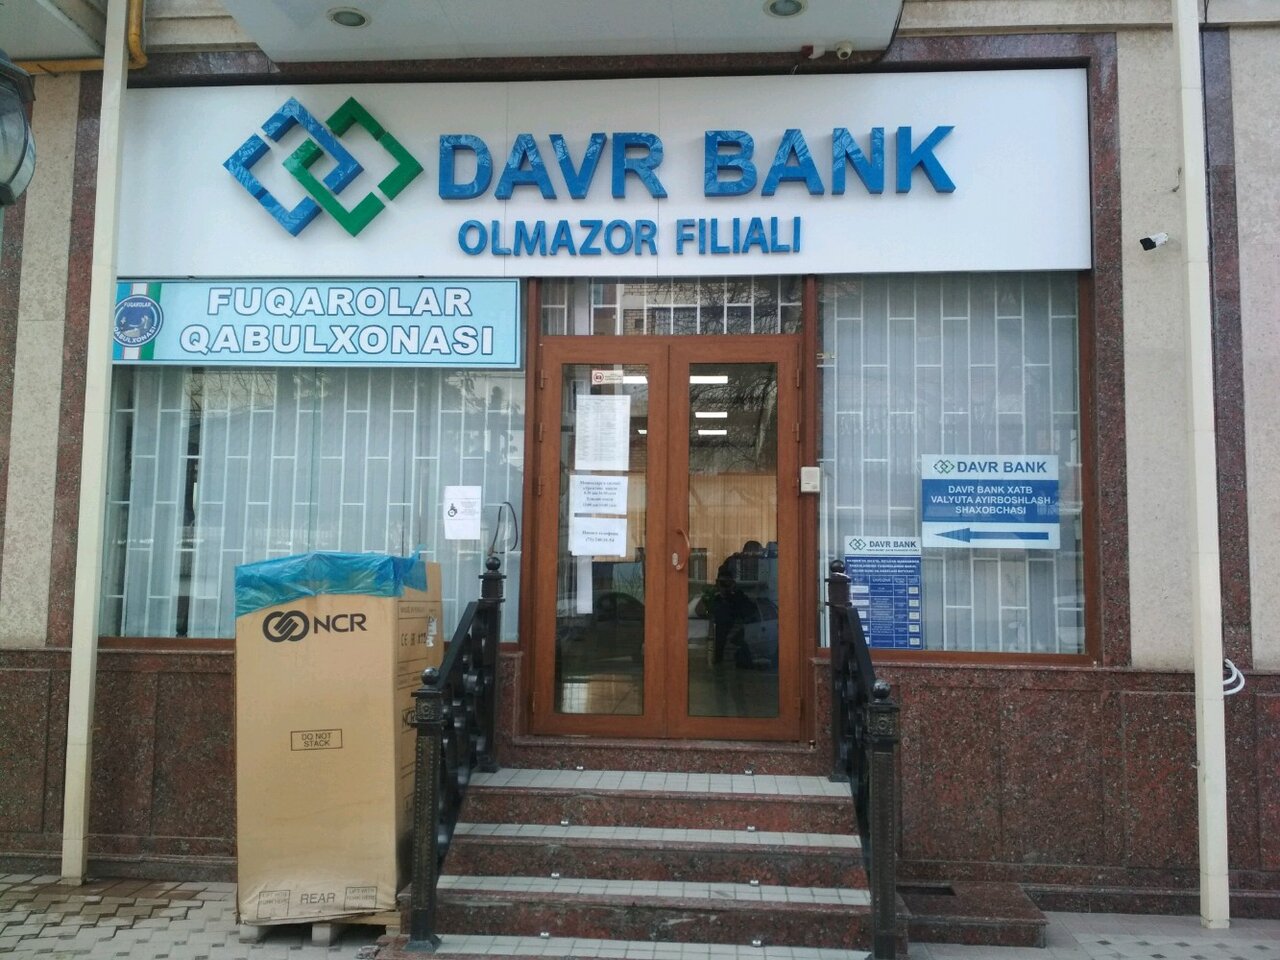 Давр банк